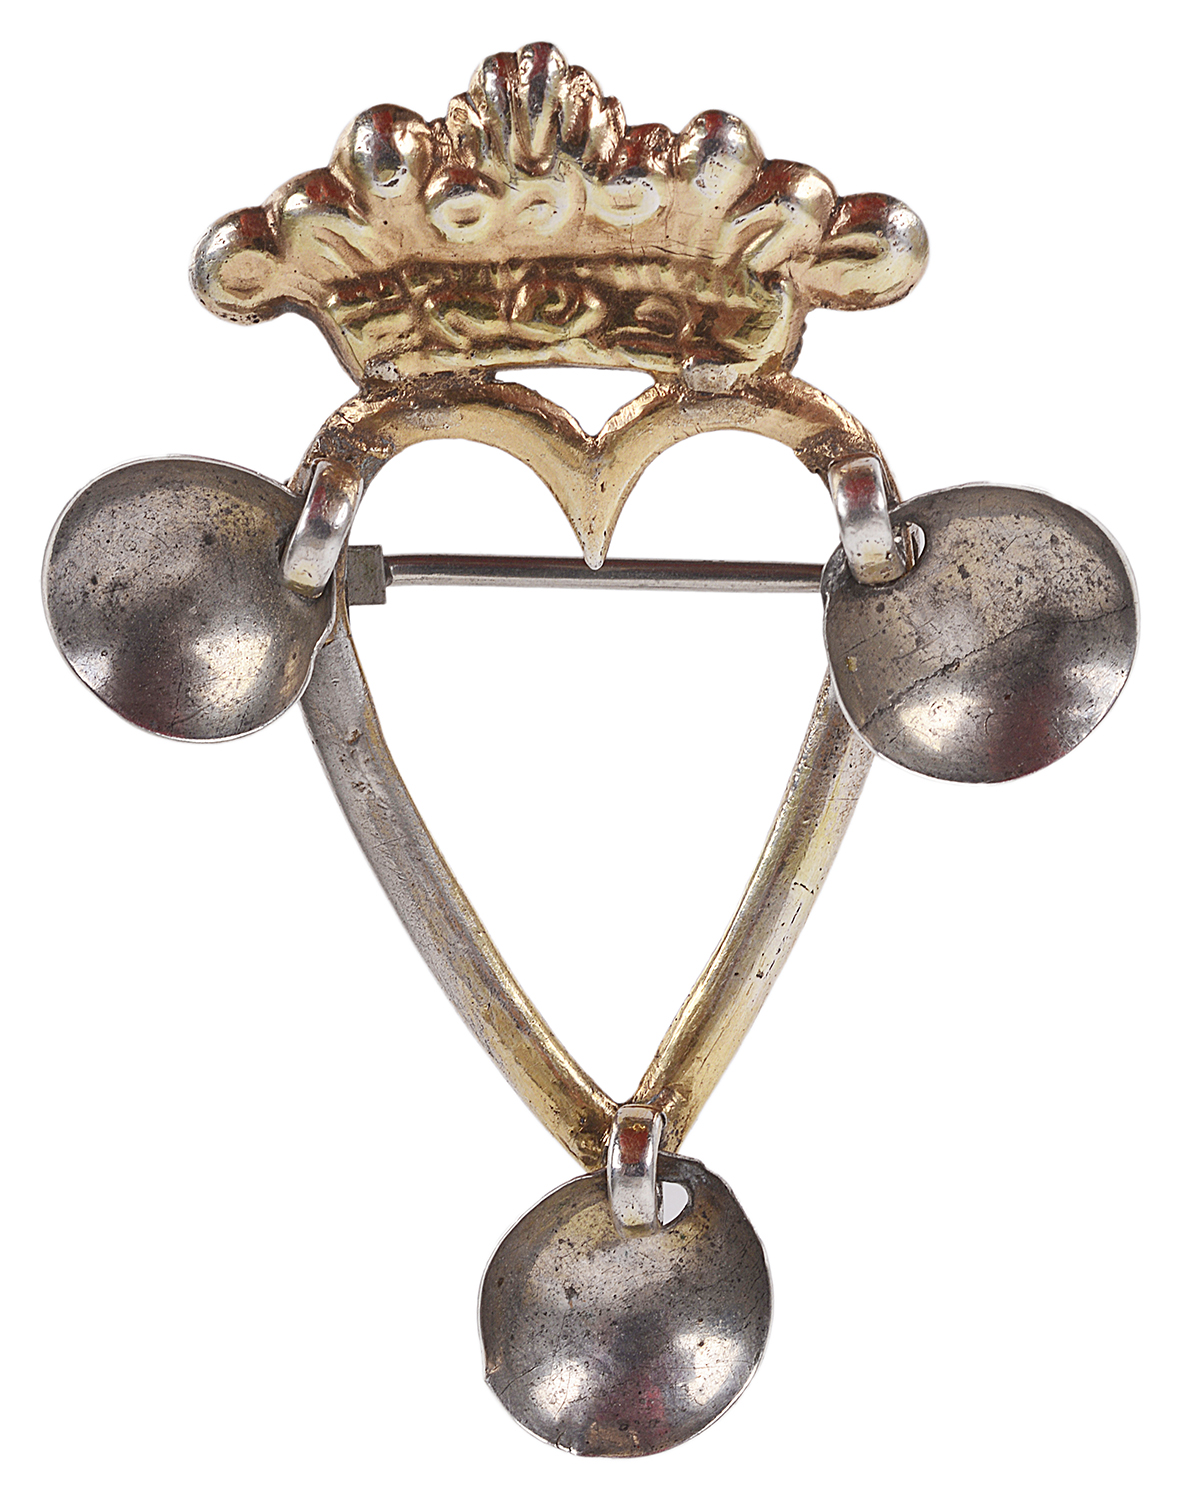 A Norweigian silver Solje heart and crown wedding brooch